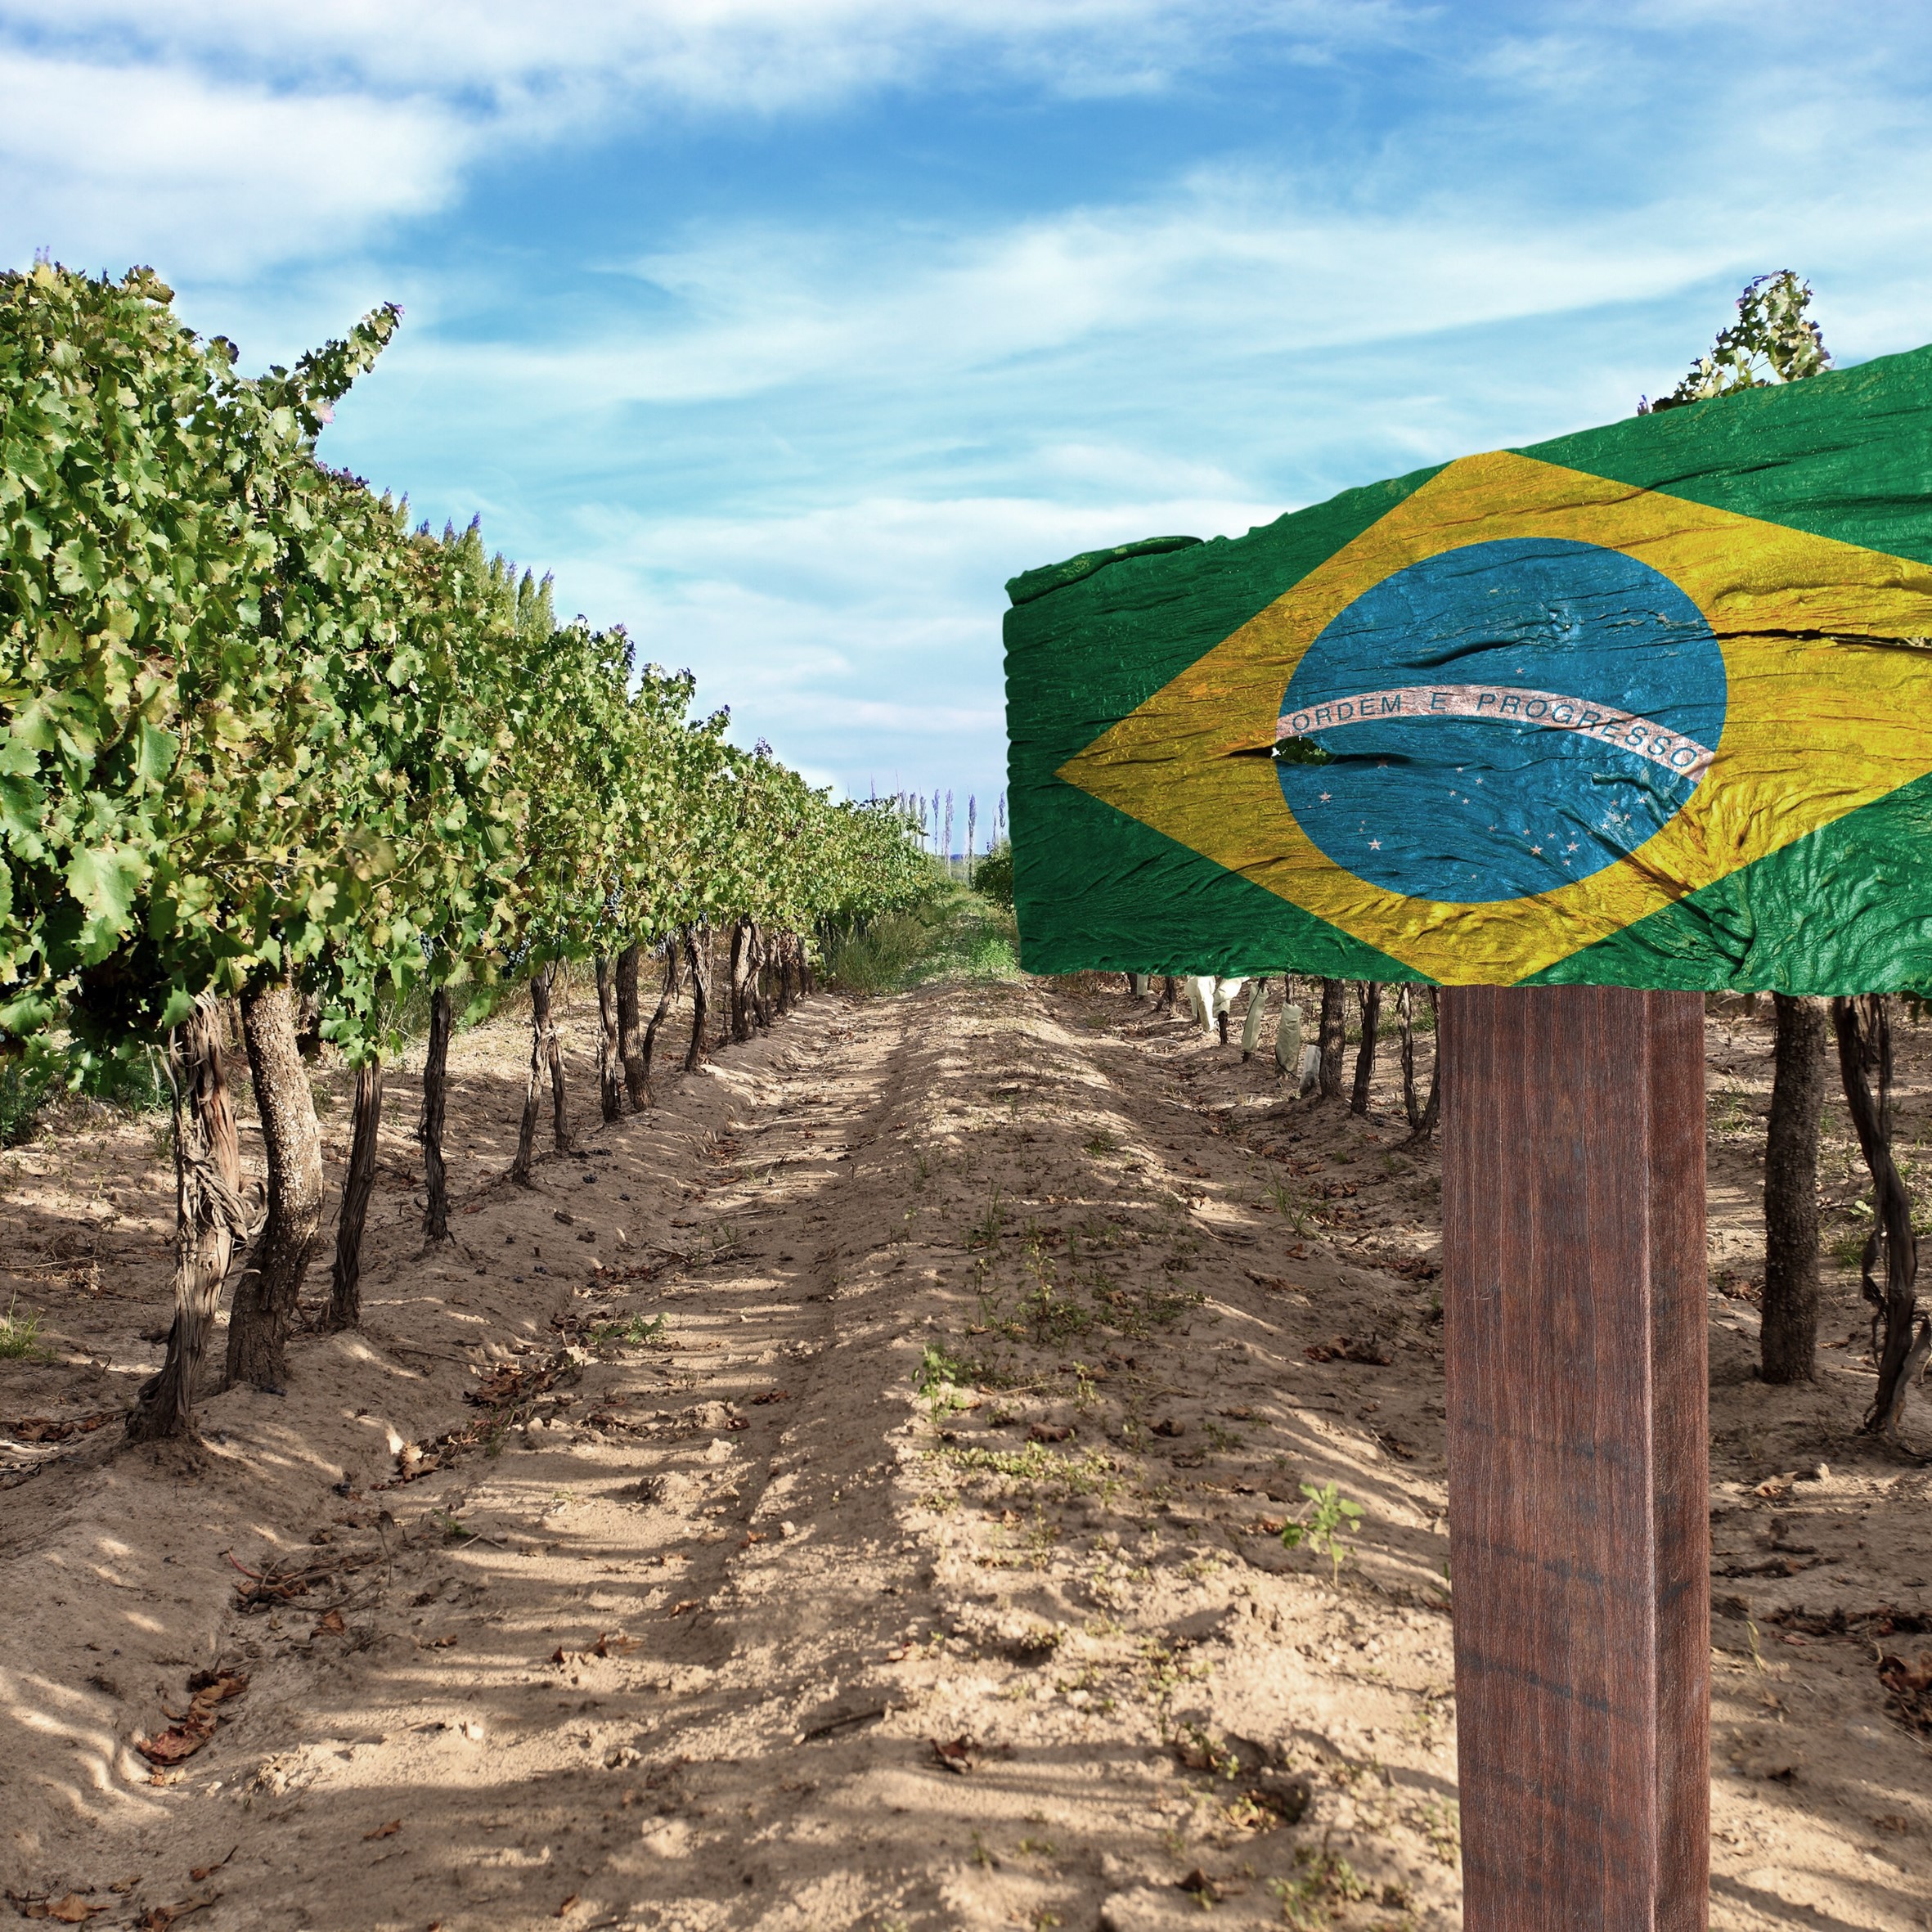 Brazil - Not so sparkly for the UK sparkling wine market